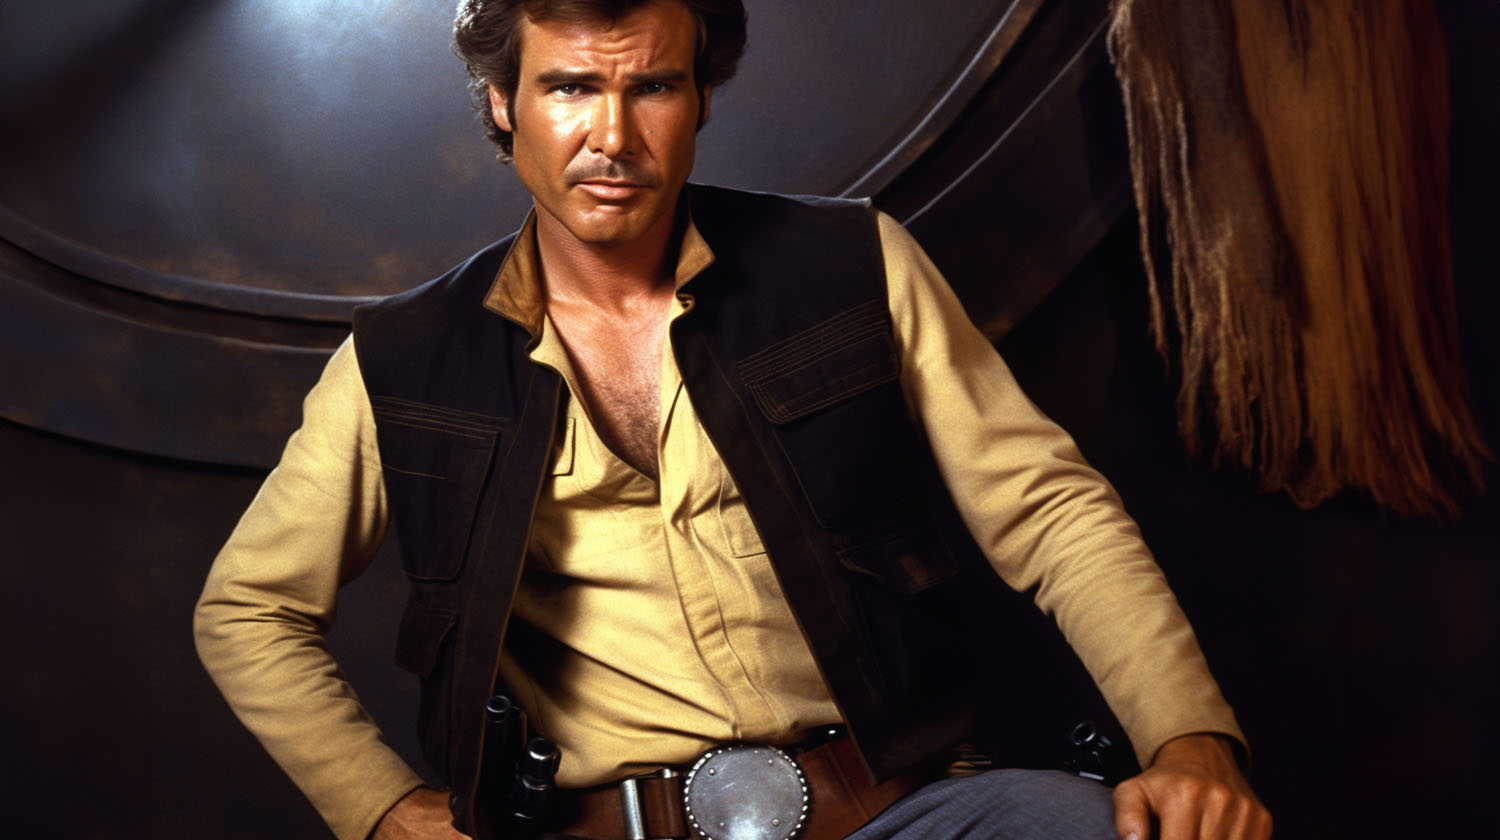 Burt Reynolds As Han Solo From Star Wars